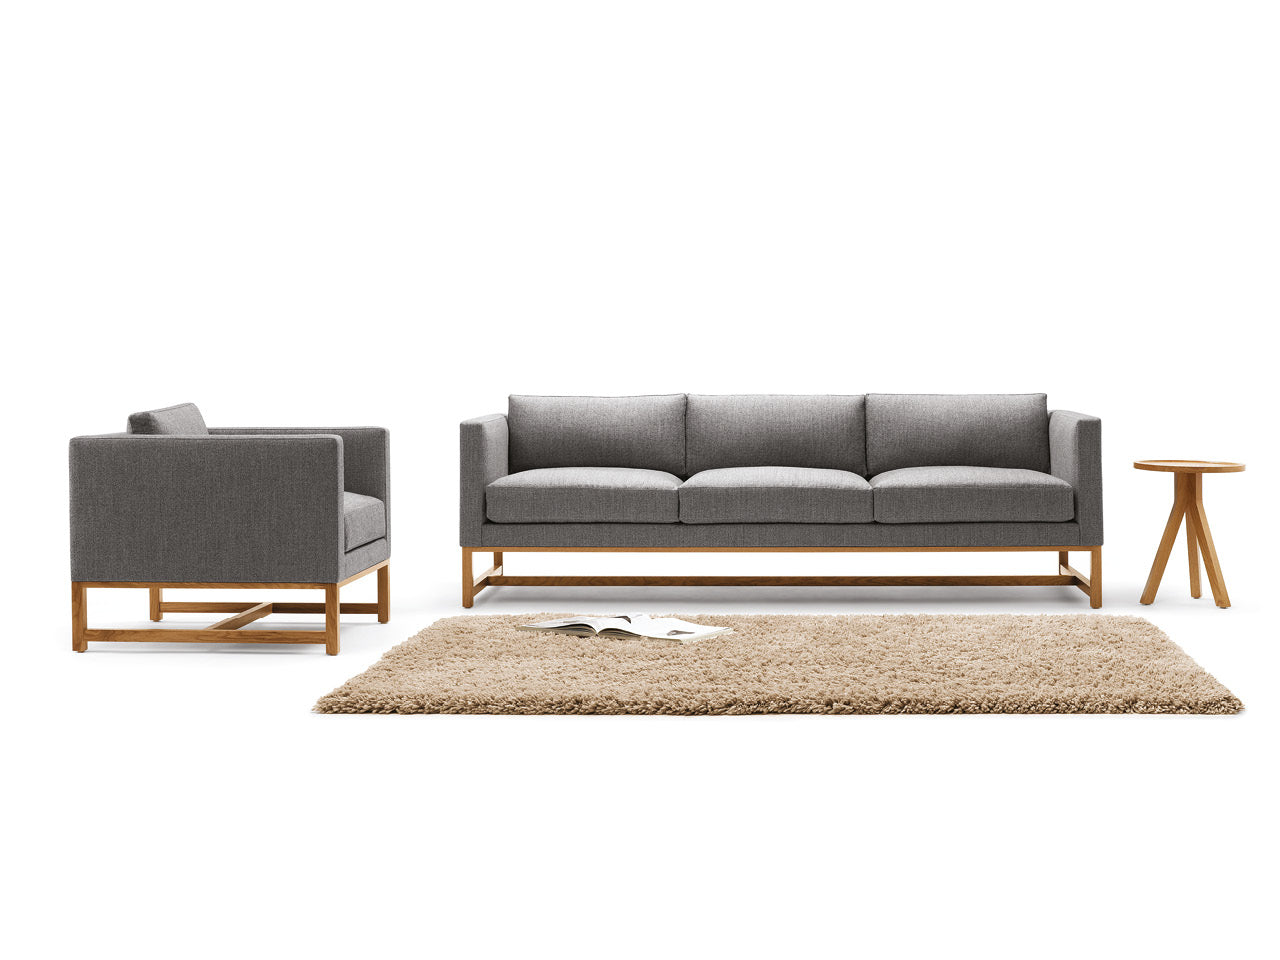 Boss Design: Orten Lounge Chair Collection